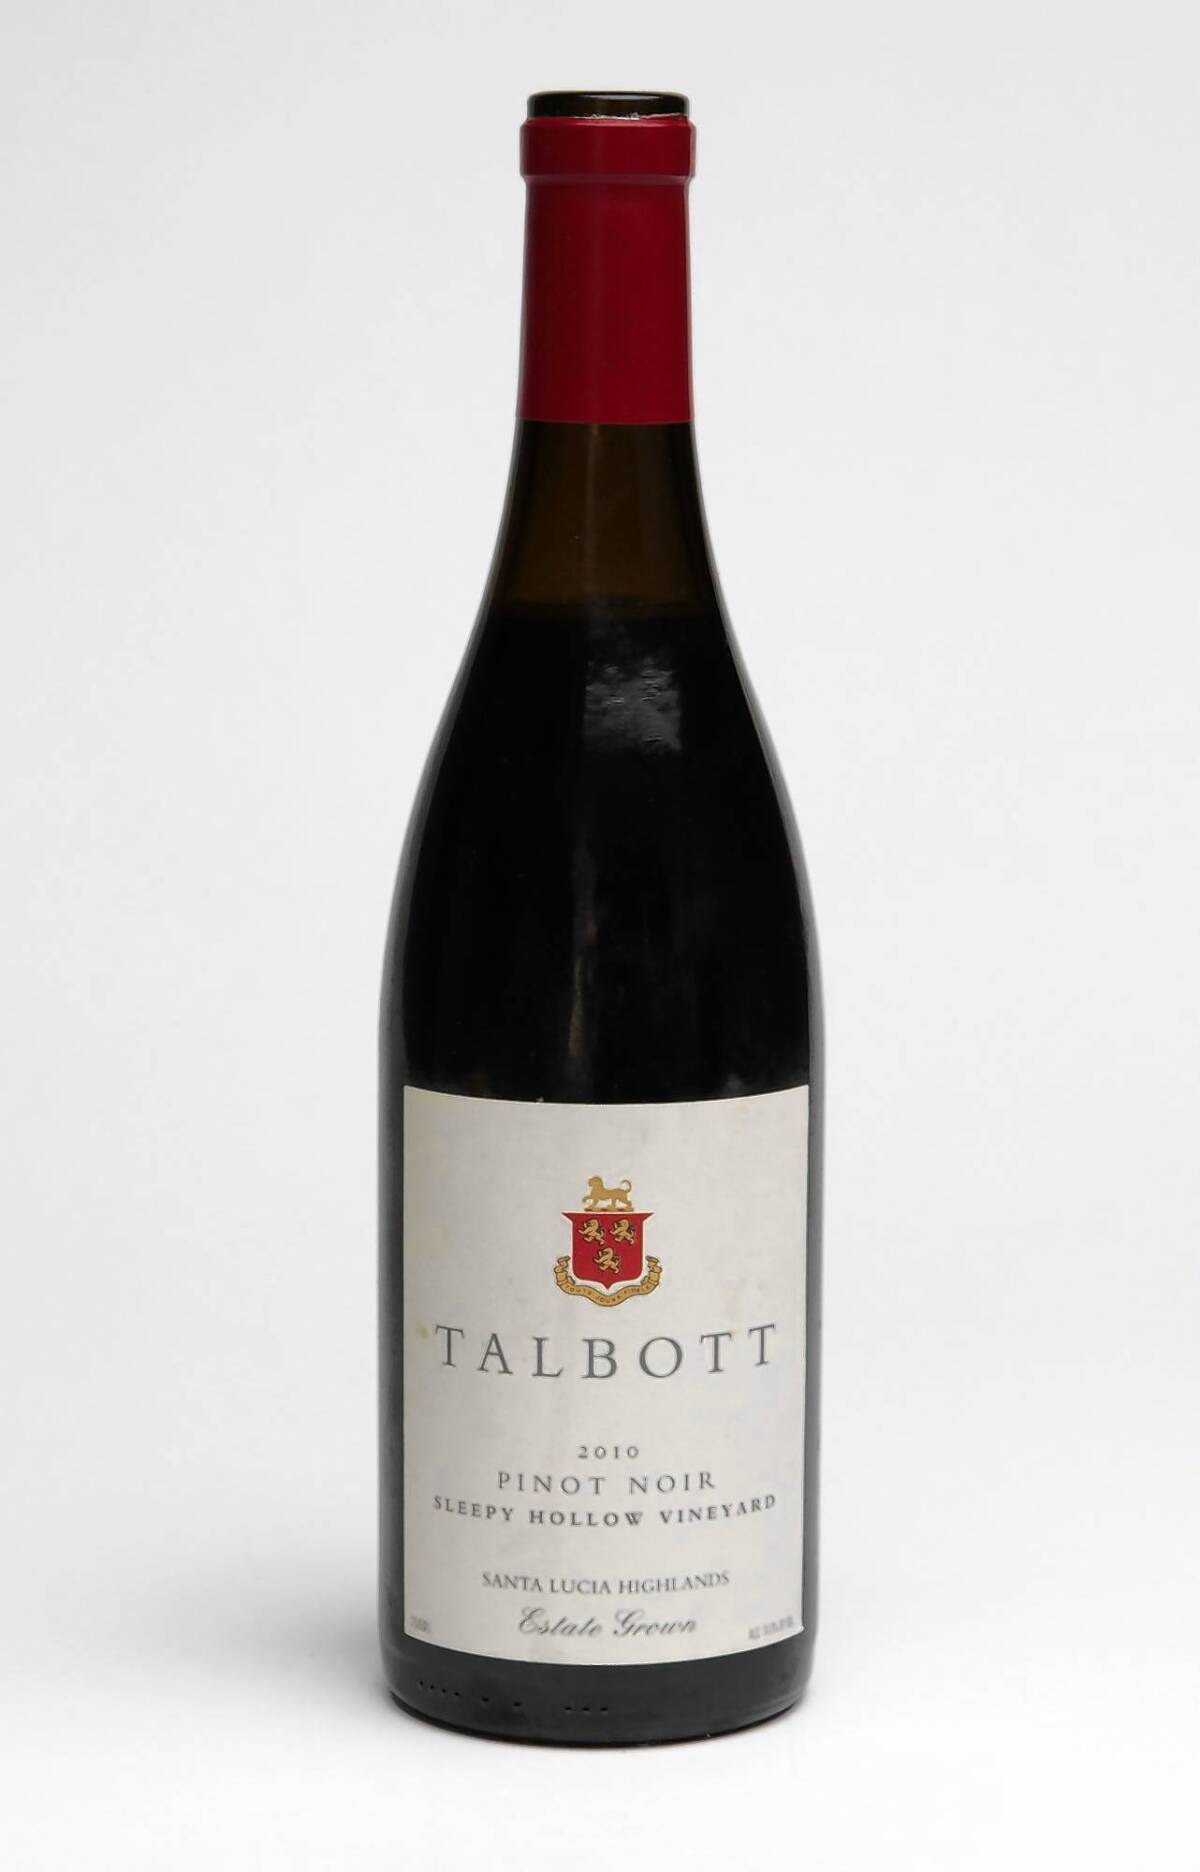 2010 Talbott Pinot Noir ‘Sleepy Hollow Vineyard’